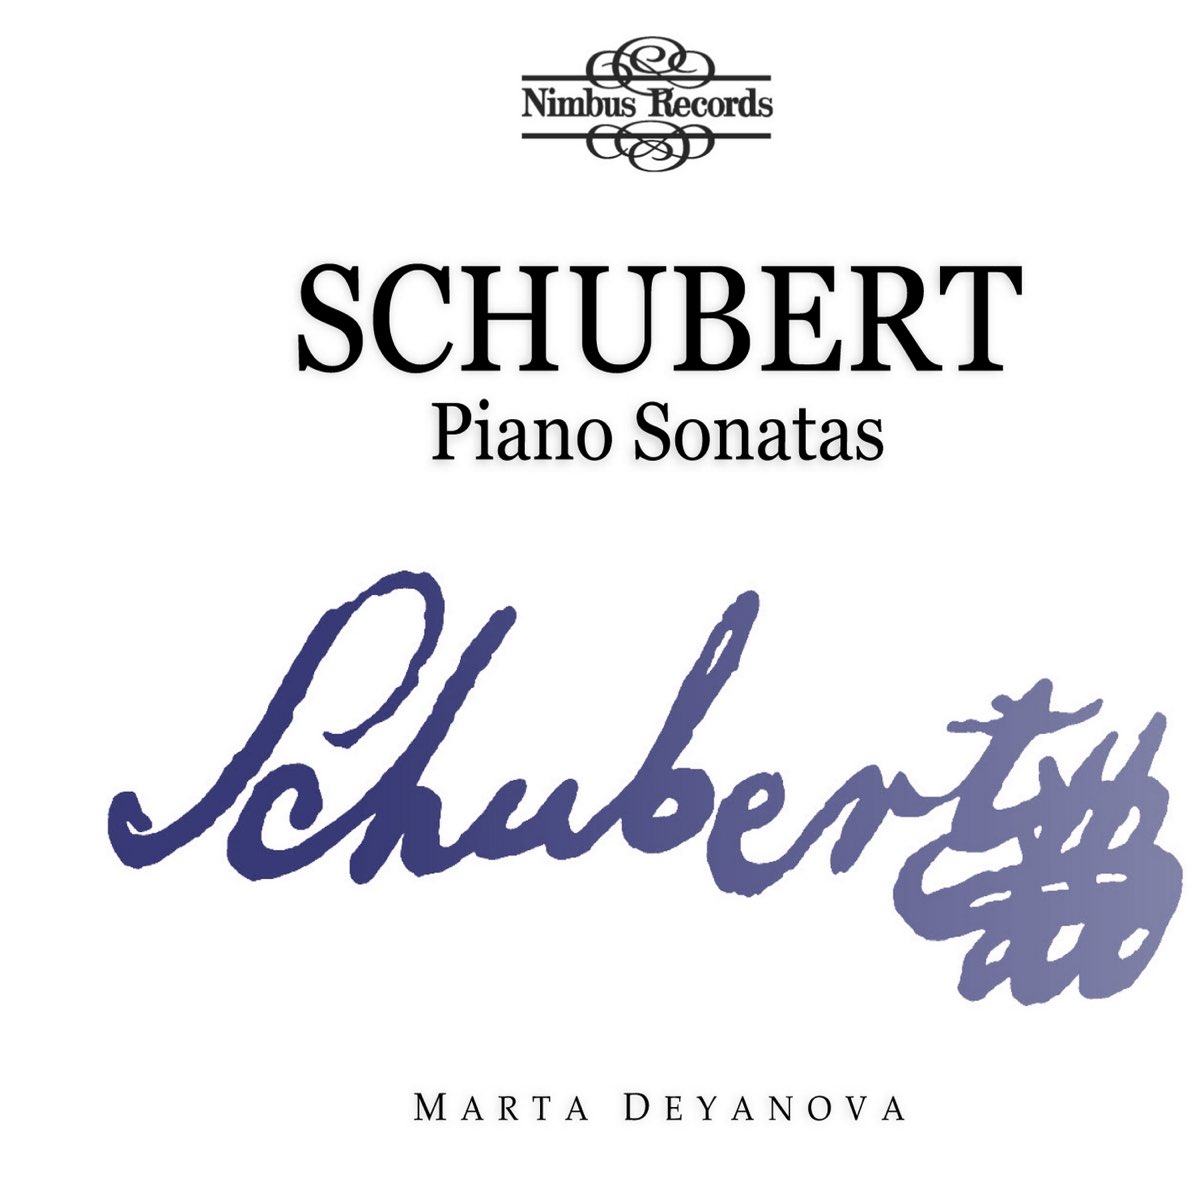 Schubert: Piano Sonatas - Album by Marta Deyanova - Apple Music